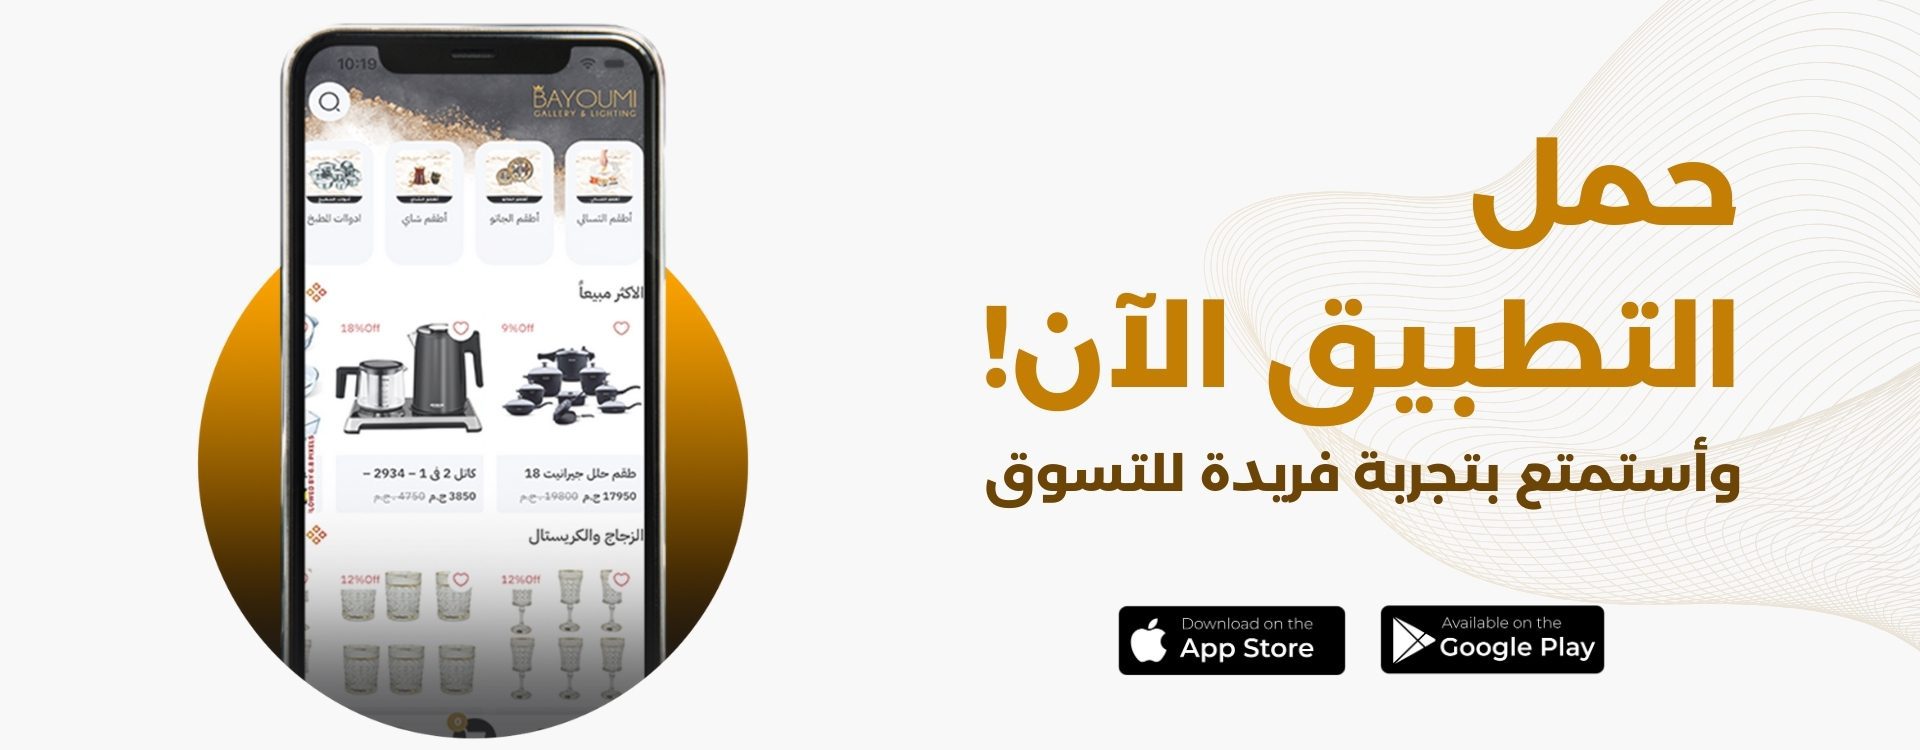 bayoumi banner app